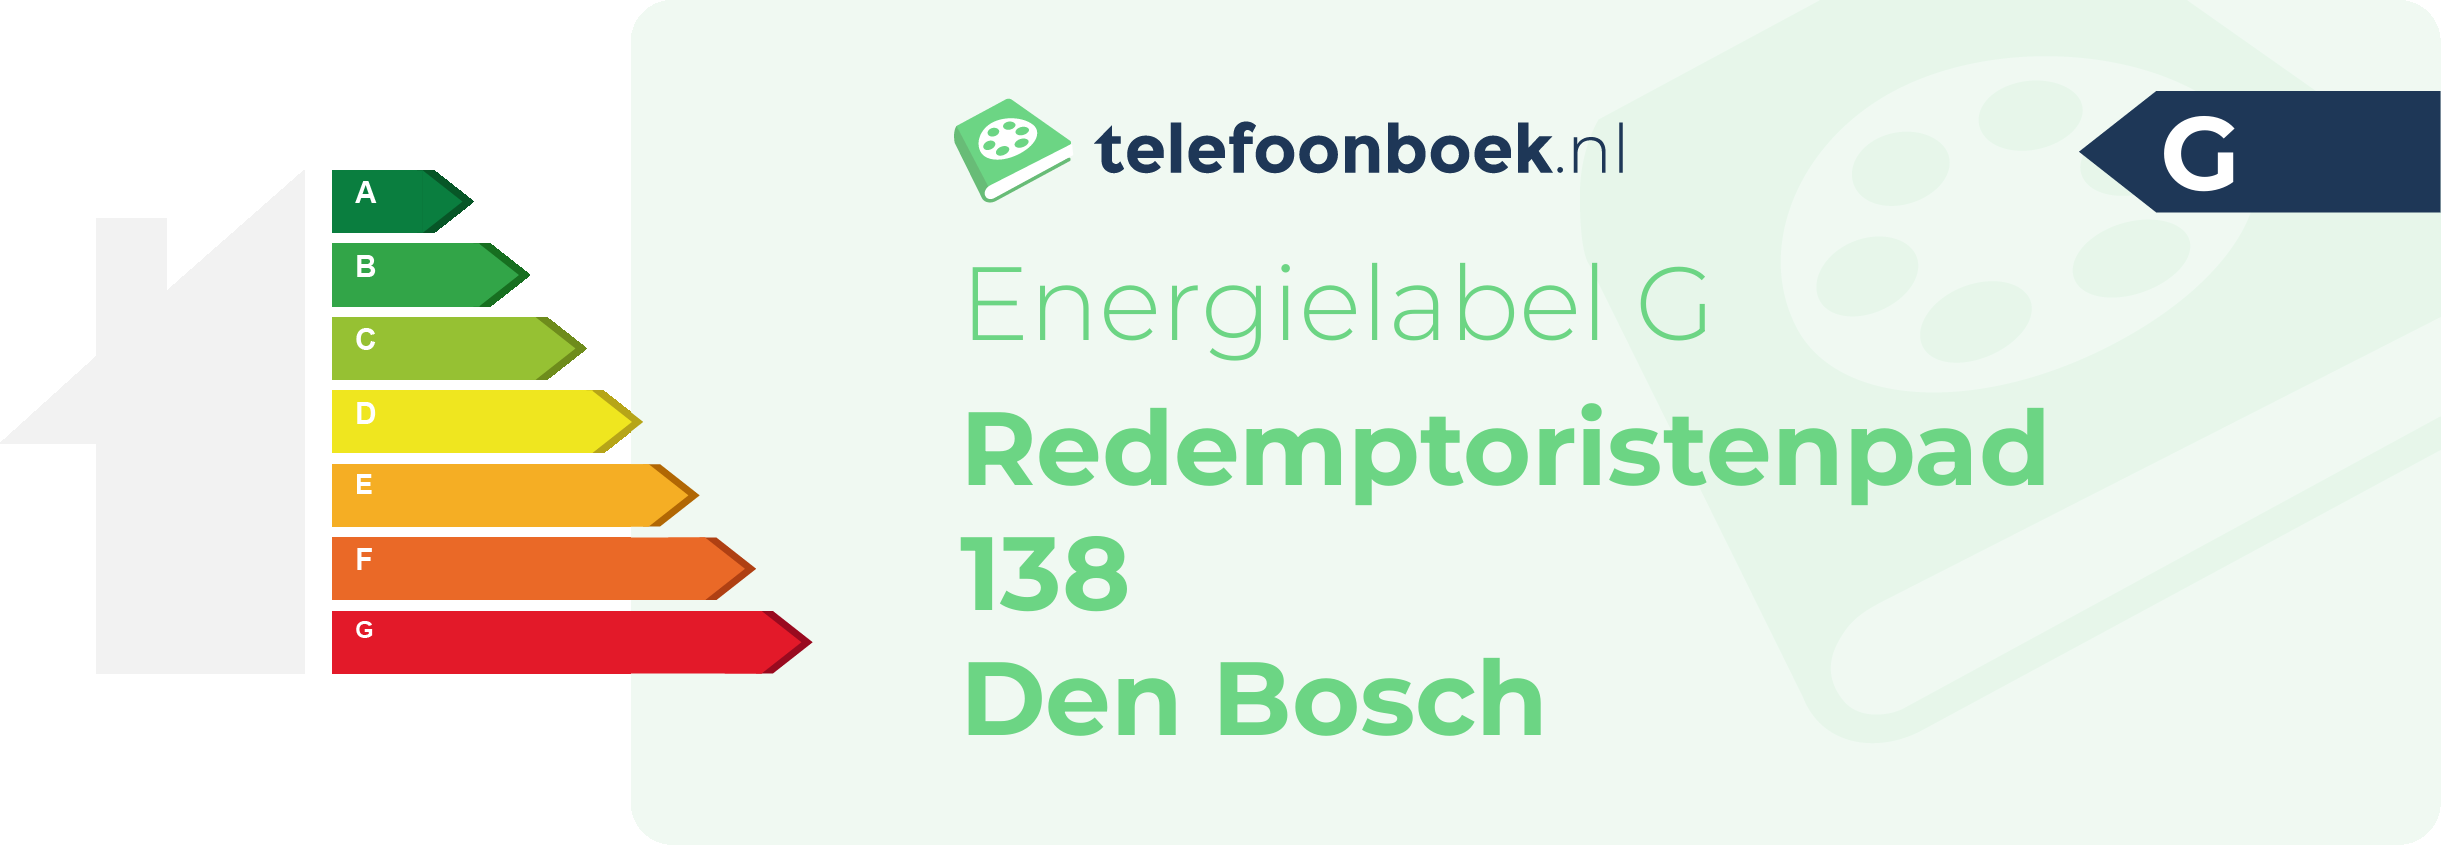 Energielabel Redemptoristenpad 138 Den Bosch